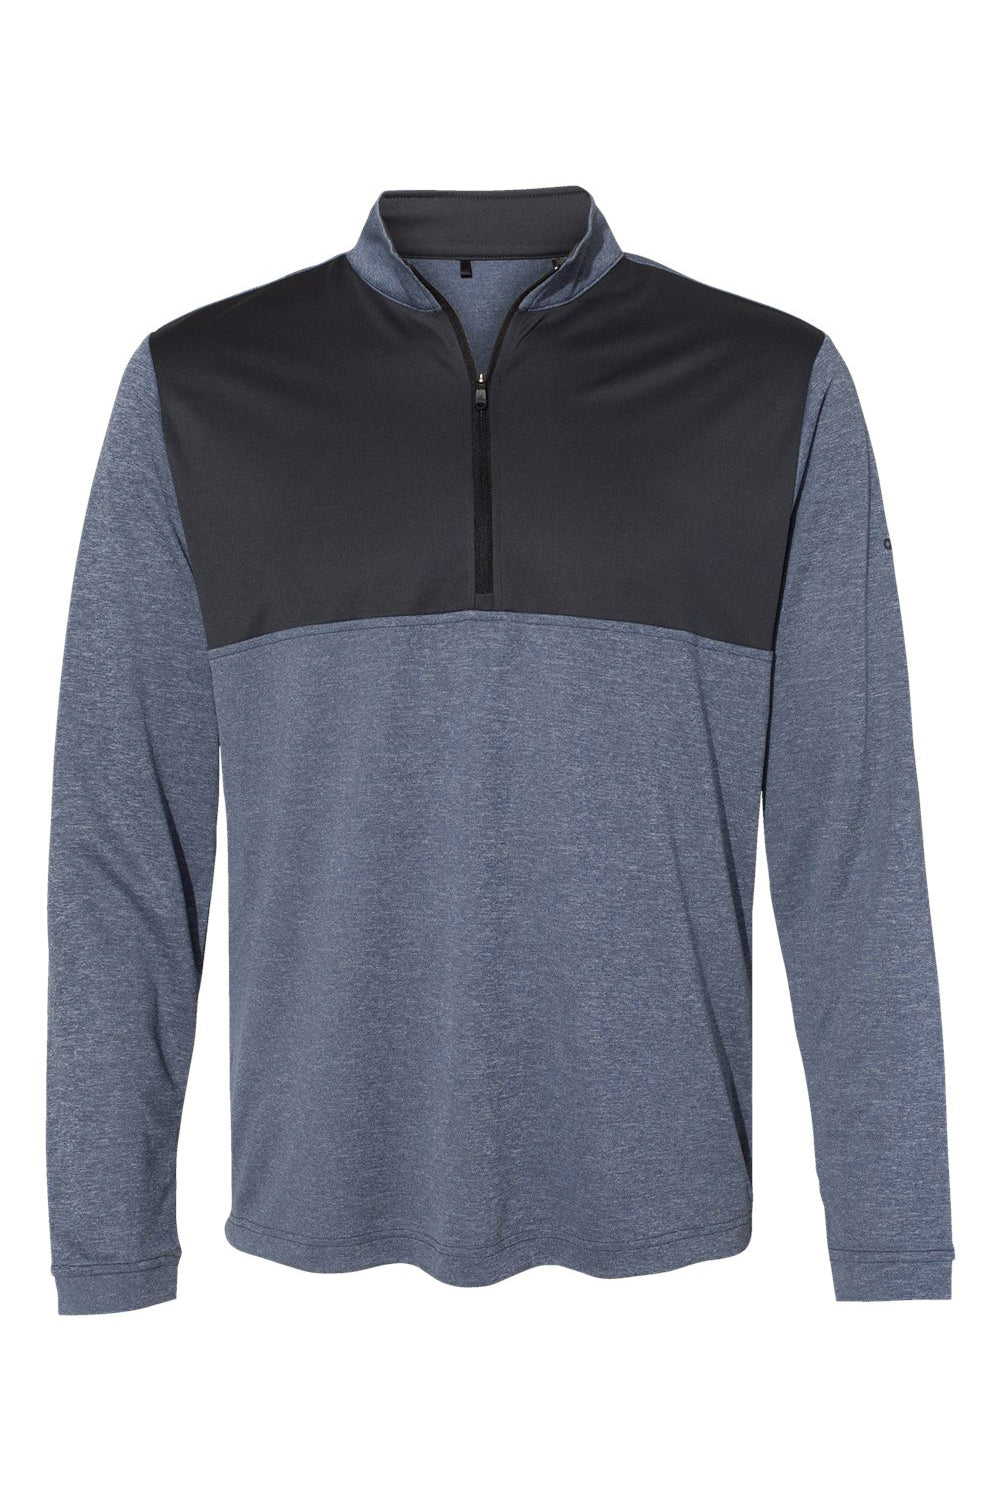 Adidas A280 Mens UPF 50+ 1/4 Zip Sweatshirt Heather Collegiate Navy Blue/Carbon Grey Flat Front